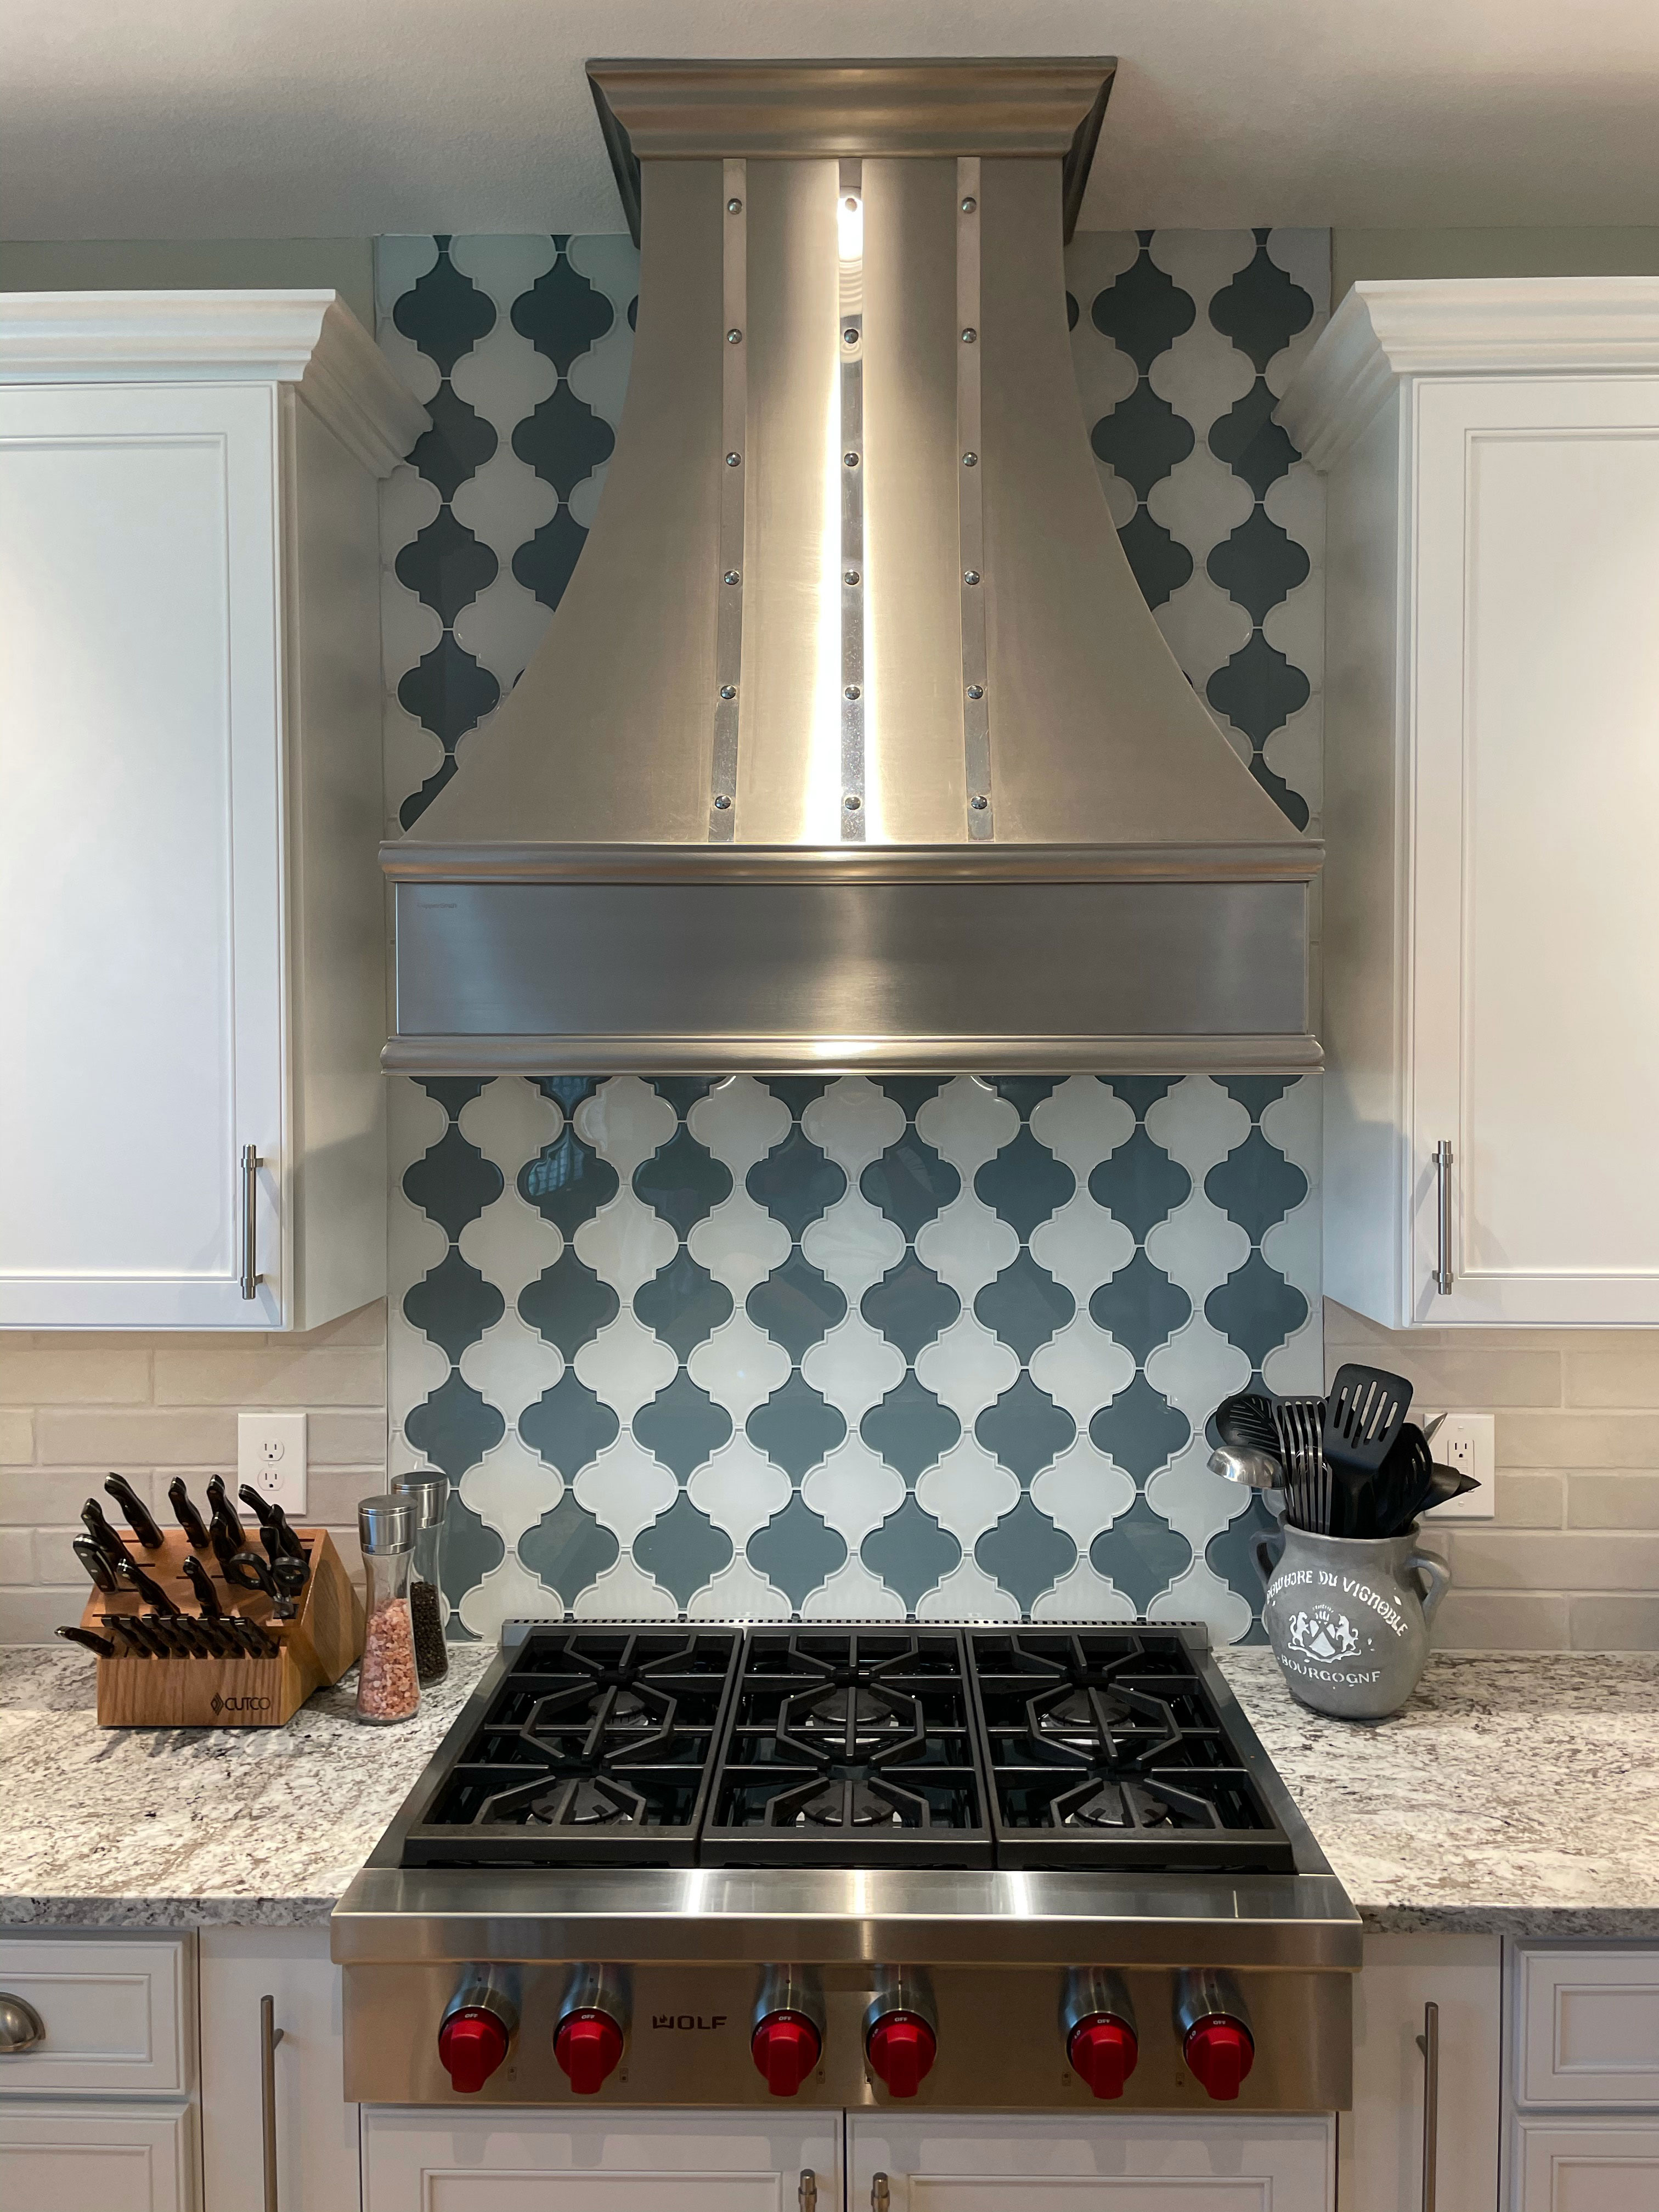 Kitchen design idea featuring range hood, french kitchen design with white kitchen cabinets,marble kitchen countertops and charming brick backsplash